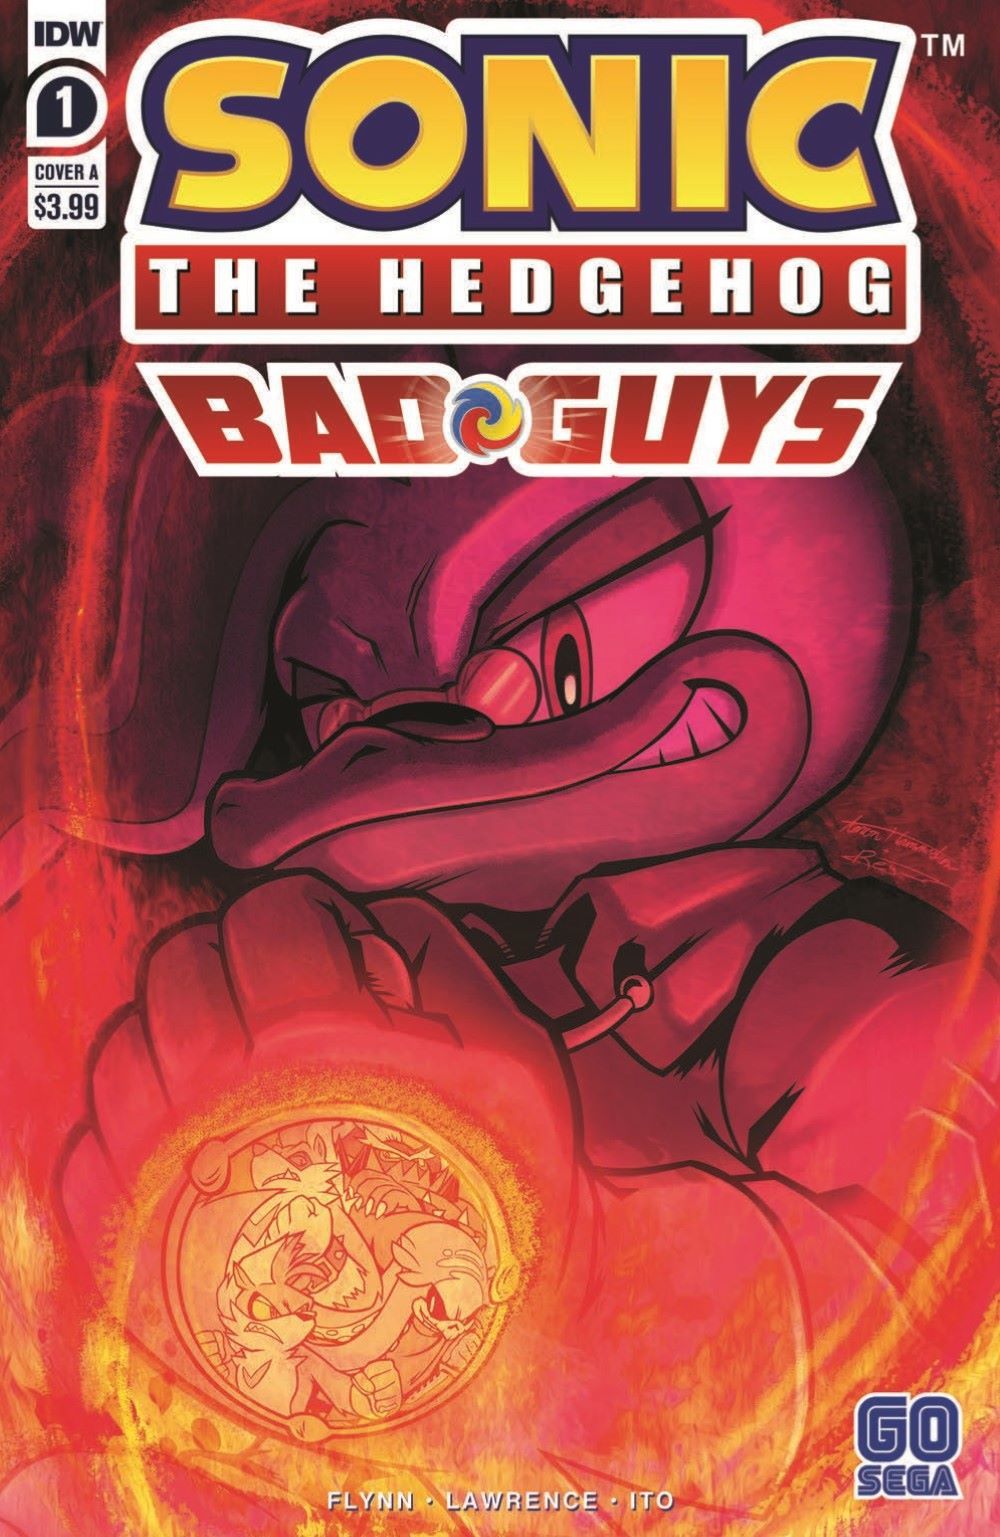 Sonic The Hedgehog Bad Guys #1